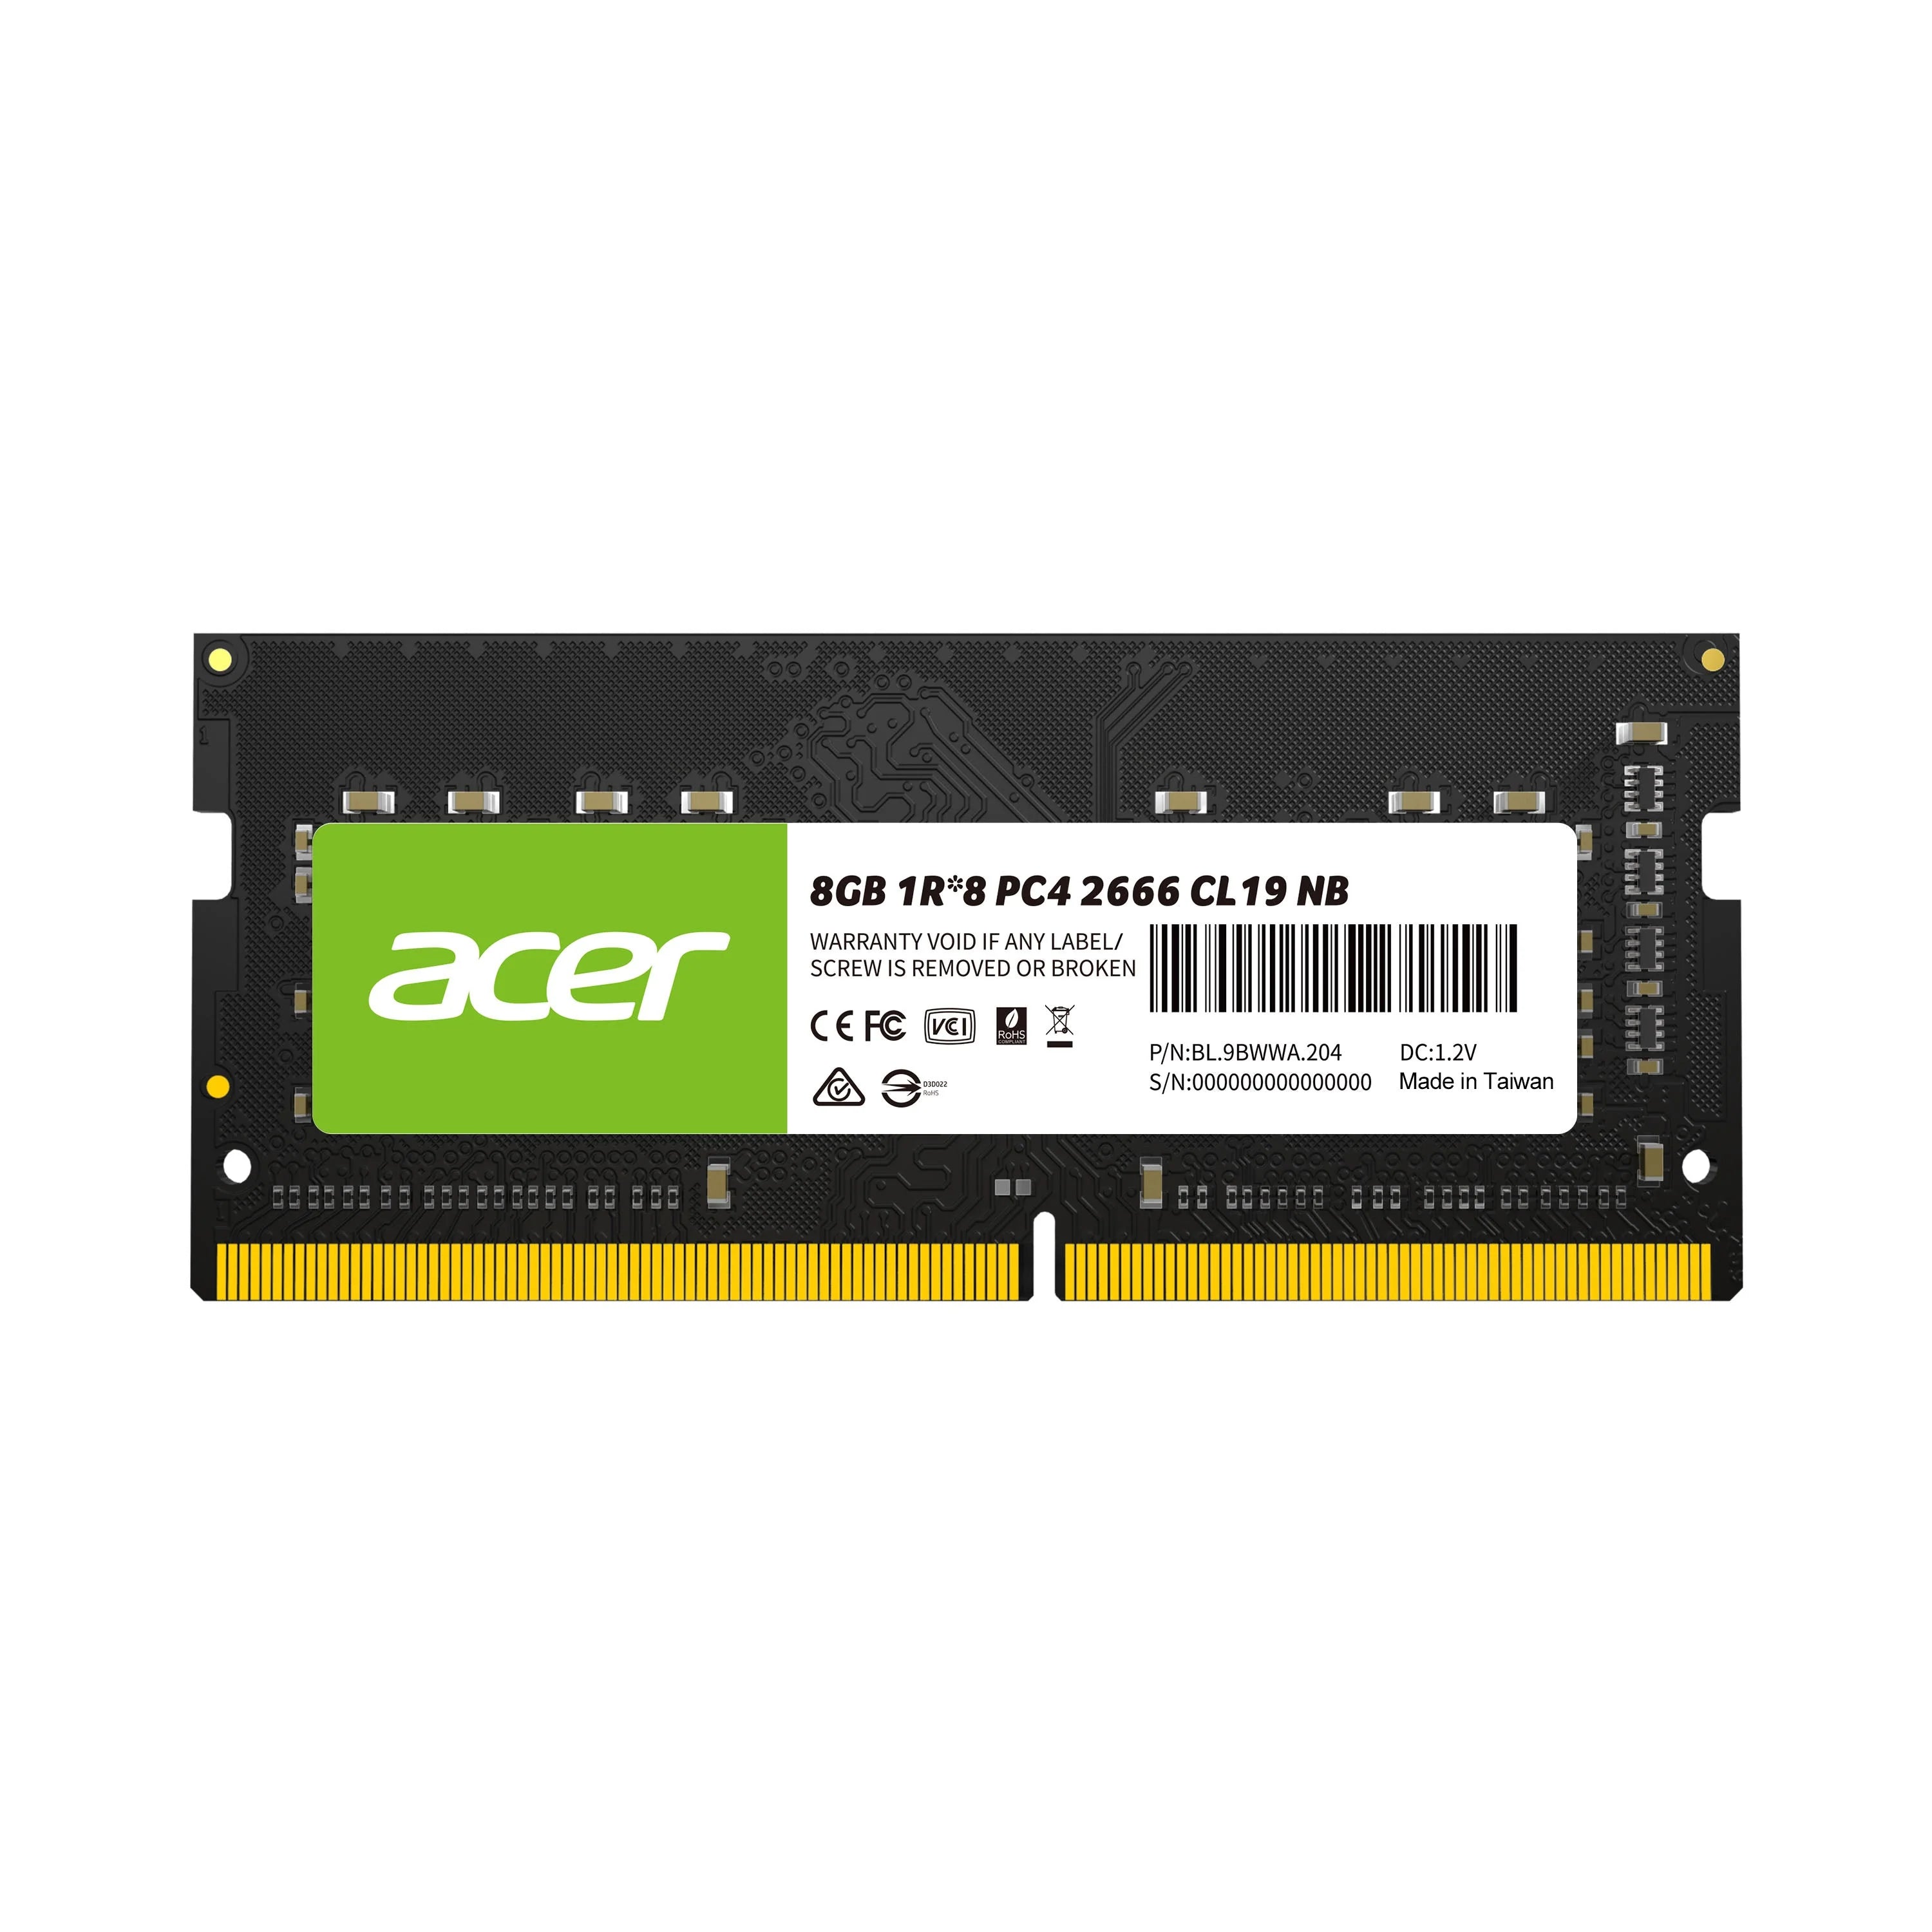 Acer SD100 Laptop DRAM (Limited Lifetime Warranty)